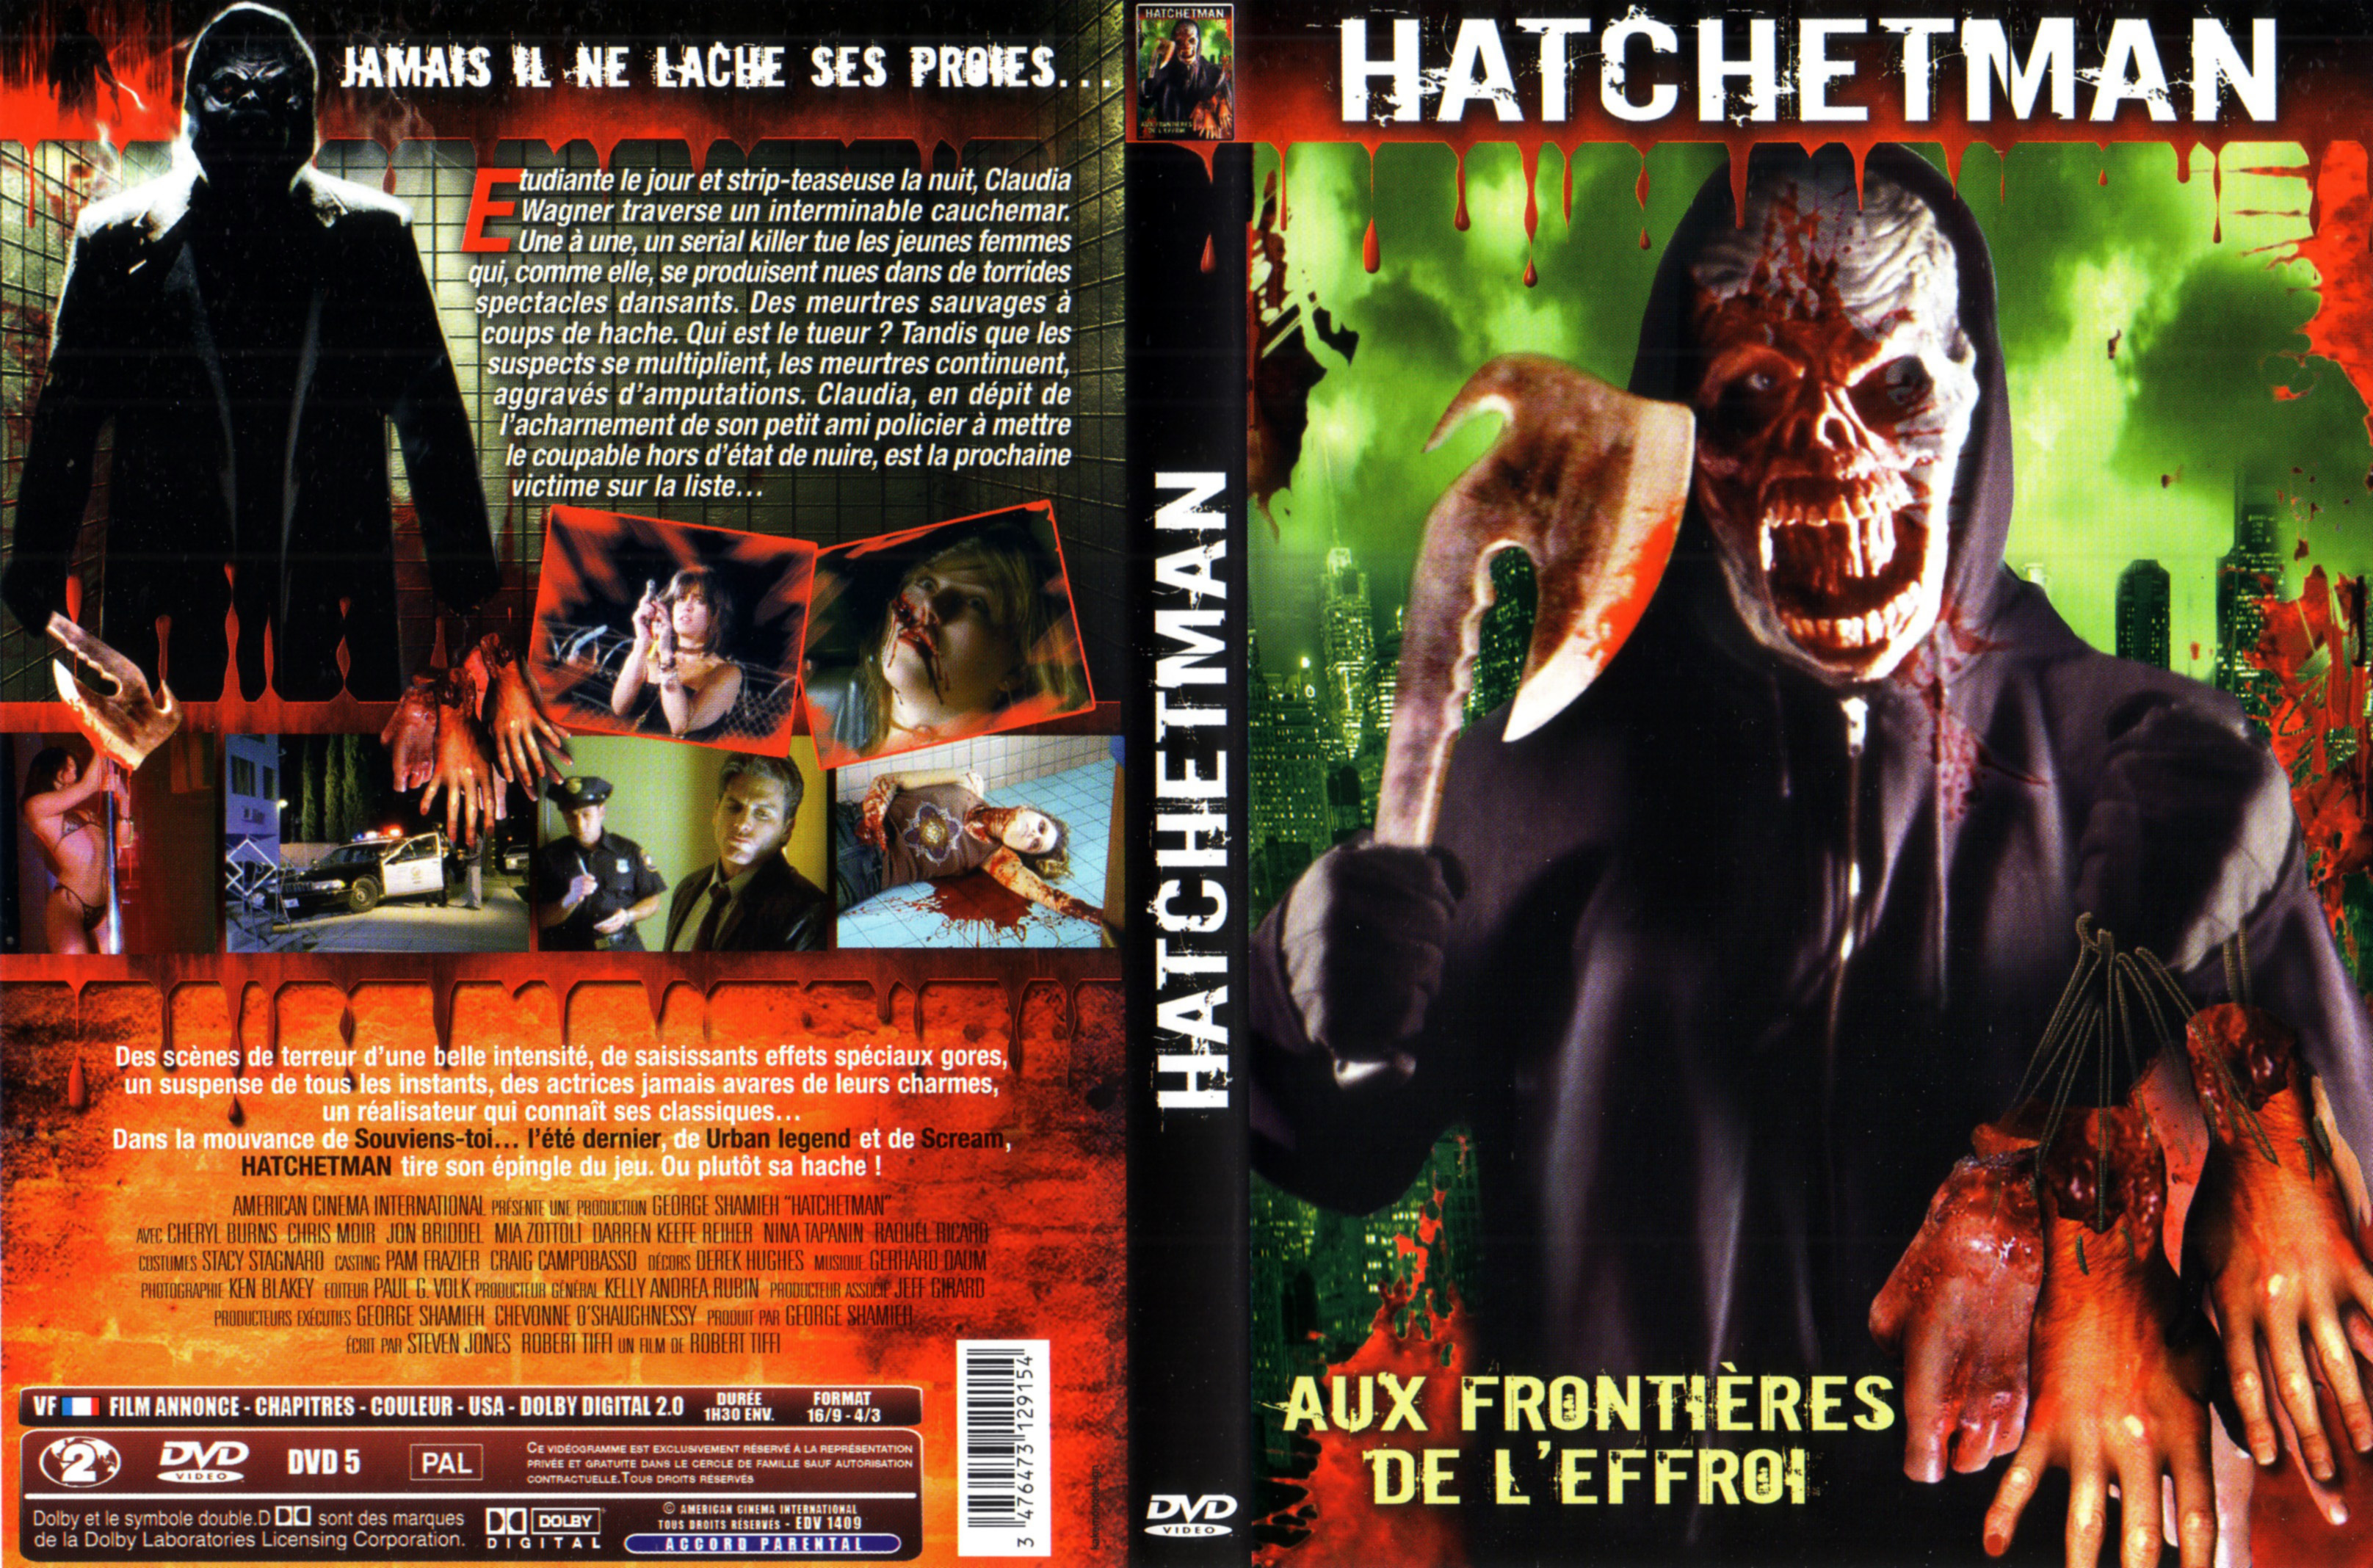 Jaquette DVD Hatchetman v2